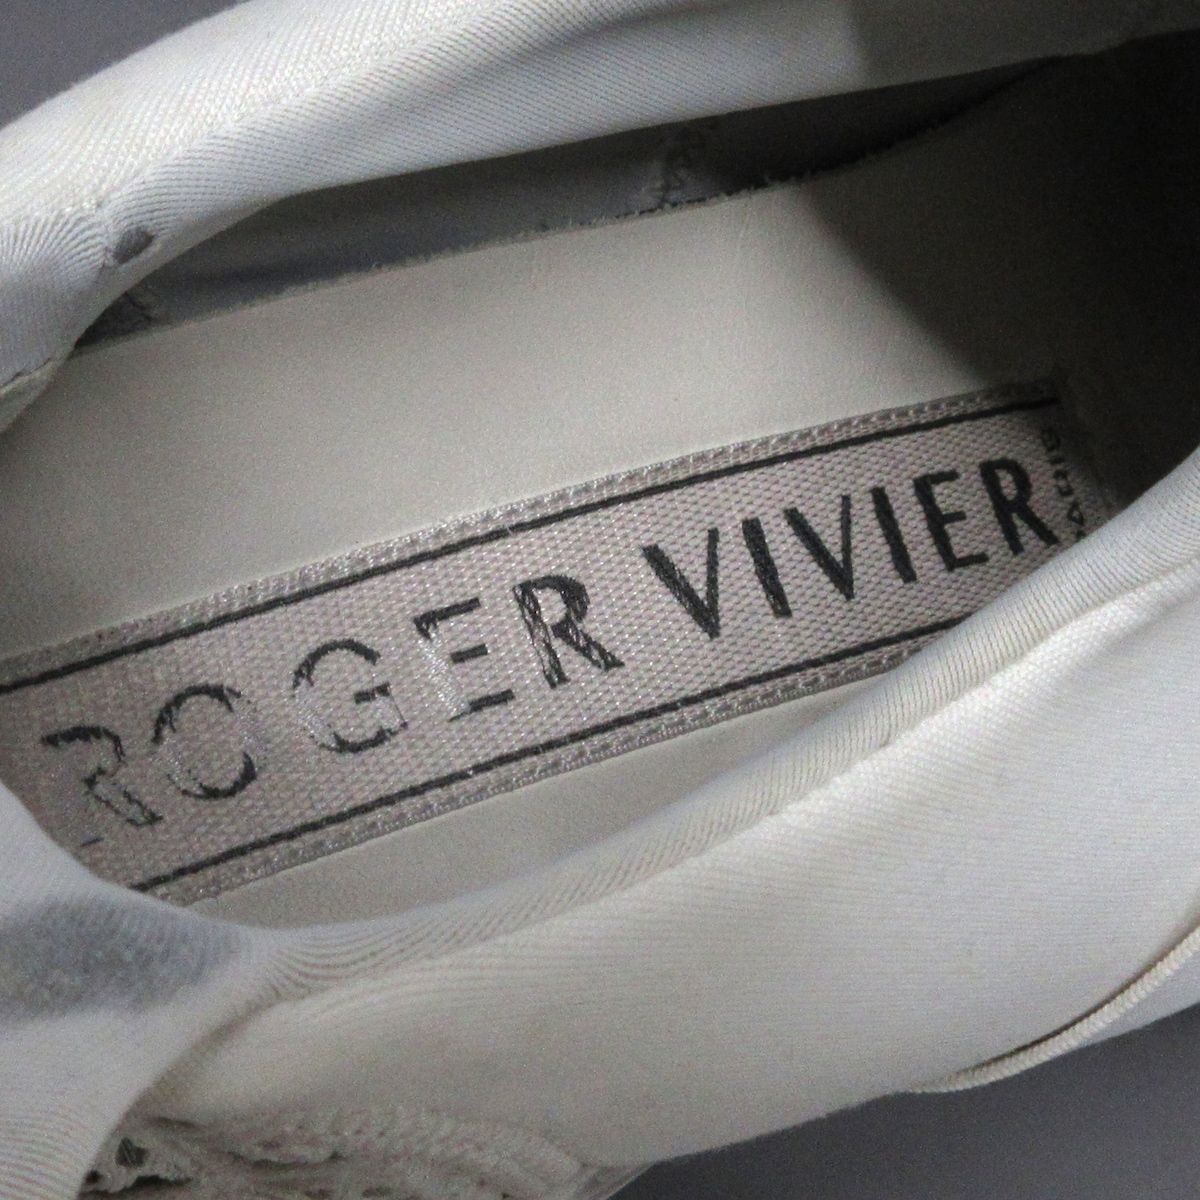 RogerVivier(ロジェヴィヴィエ) スニーカー 37 1/2 レディース - 白×クリア ビジュー 化学繊維 - メルカリ